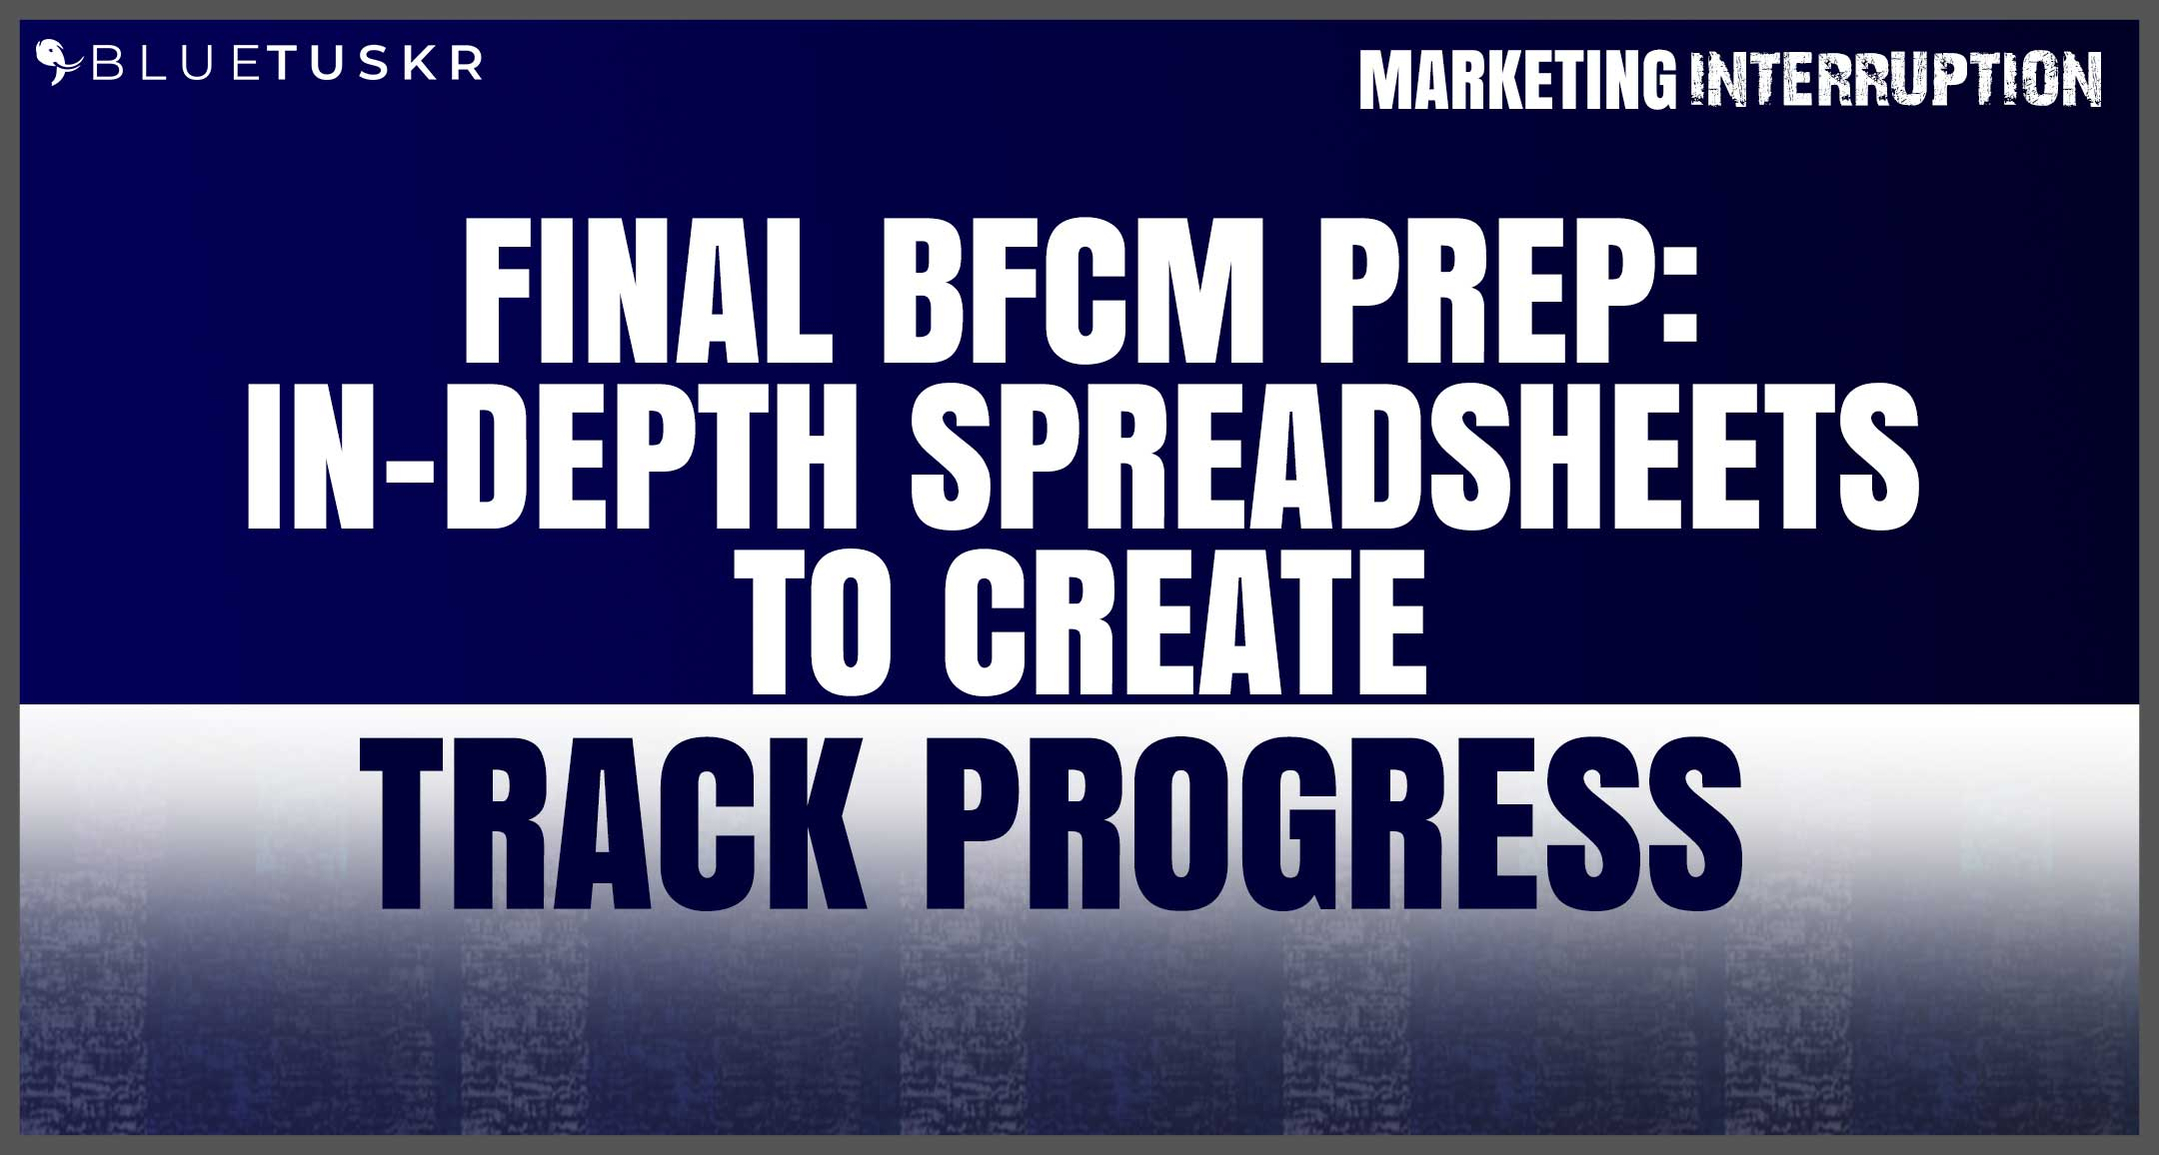 Final BFCM Prep: In-depth Spreadsheets to Create Track Progress